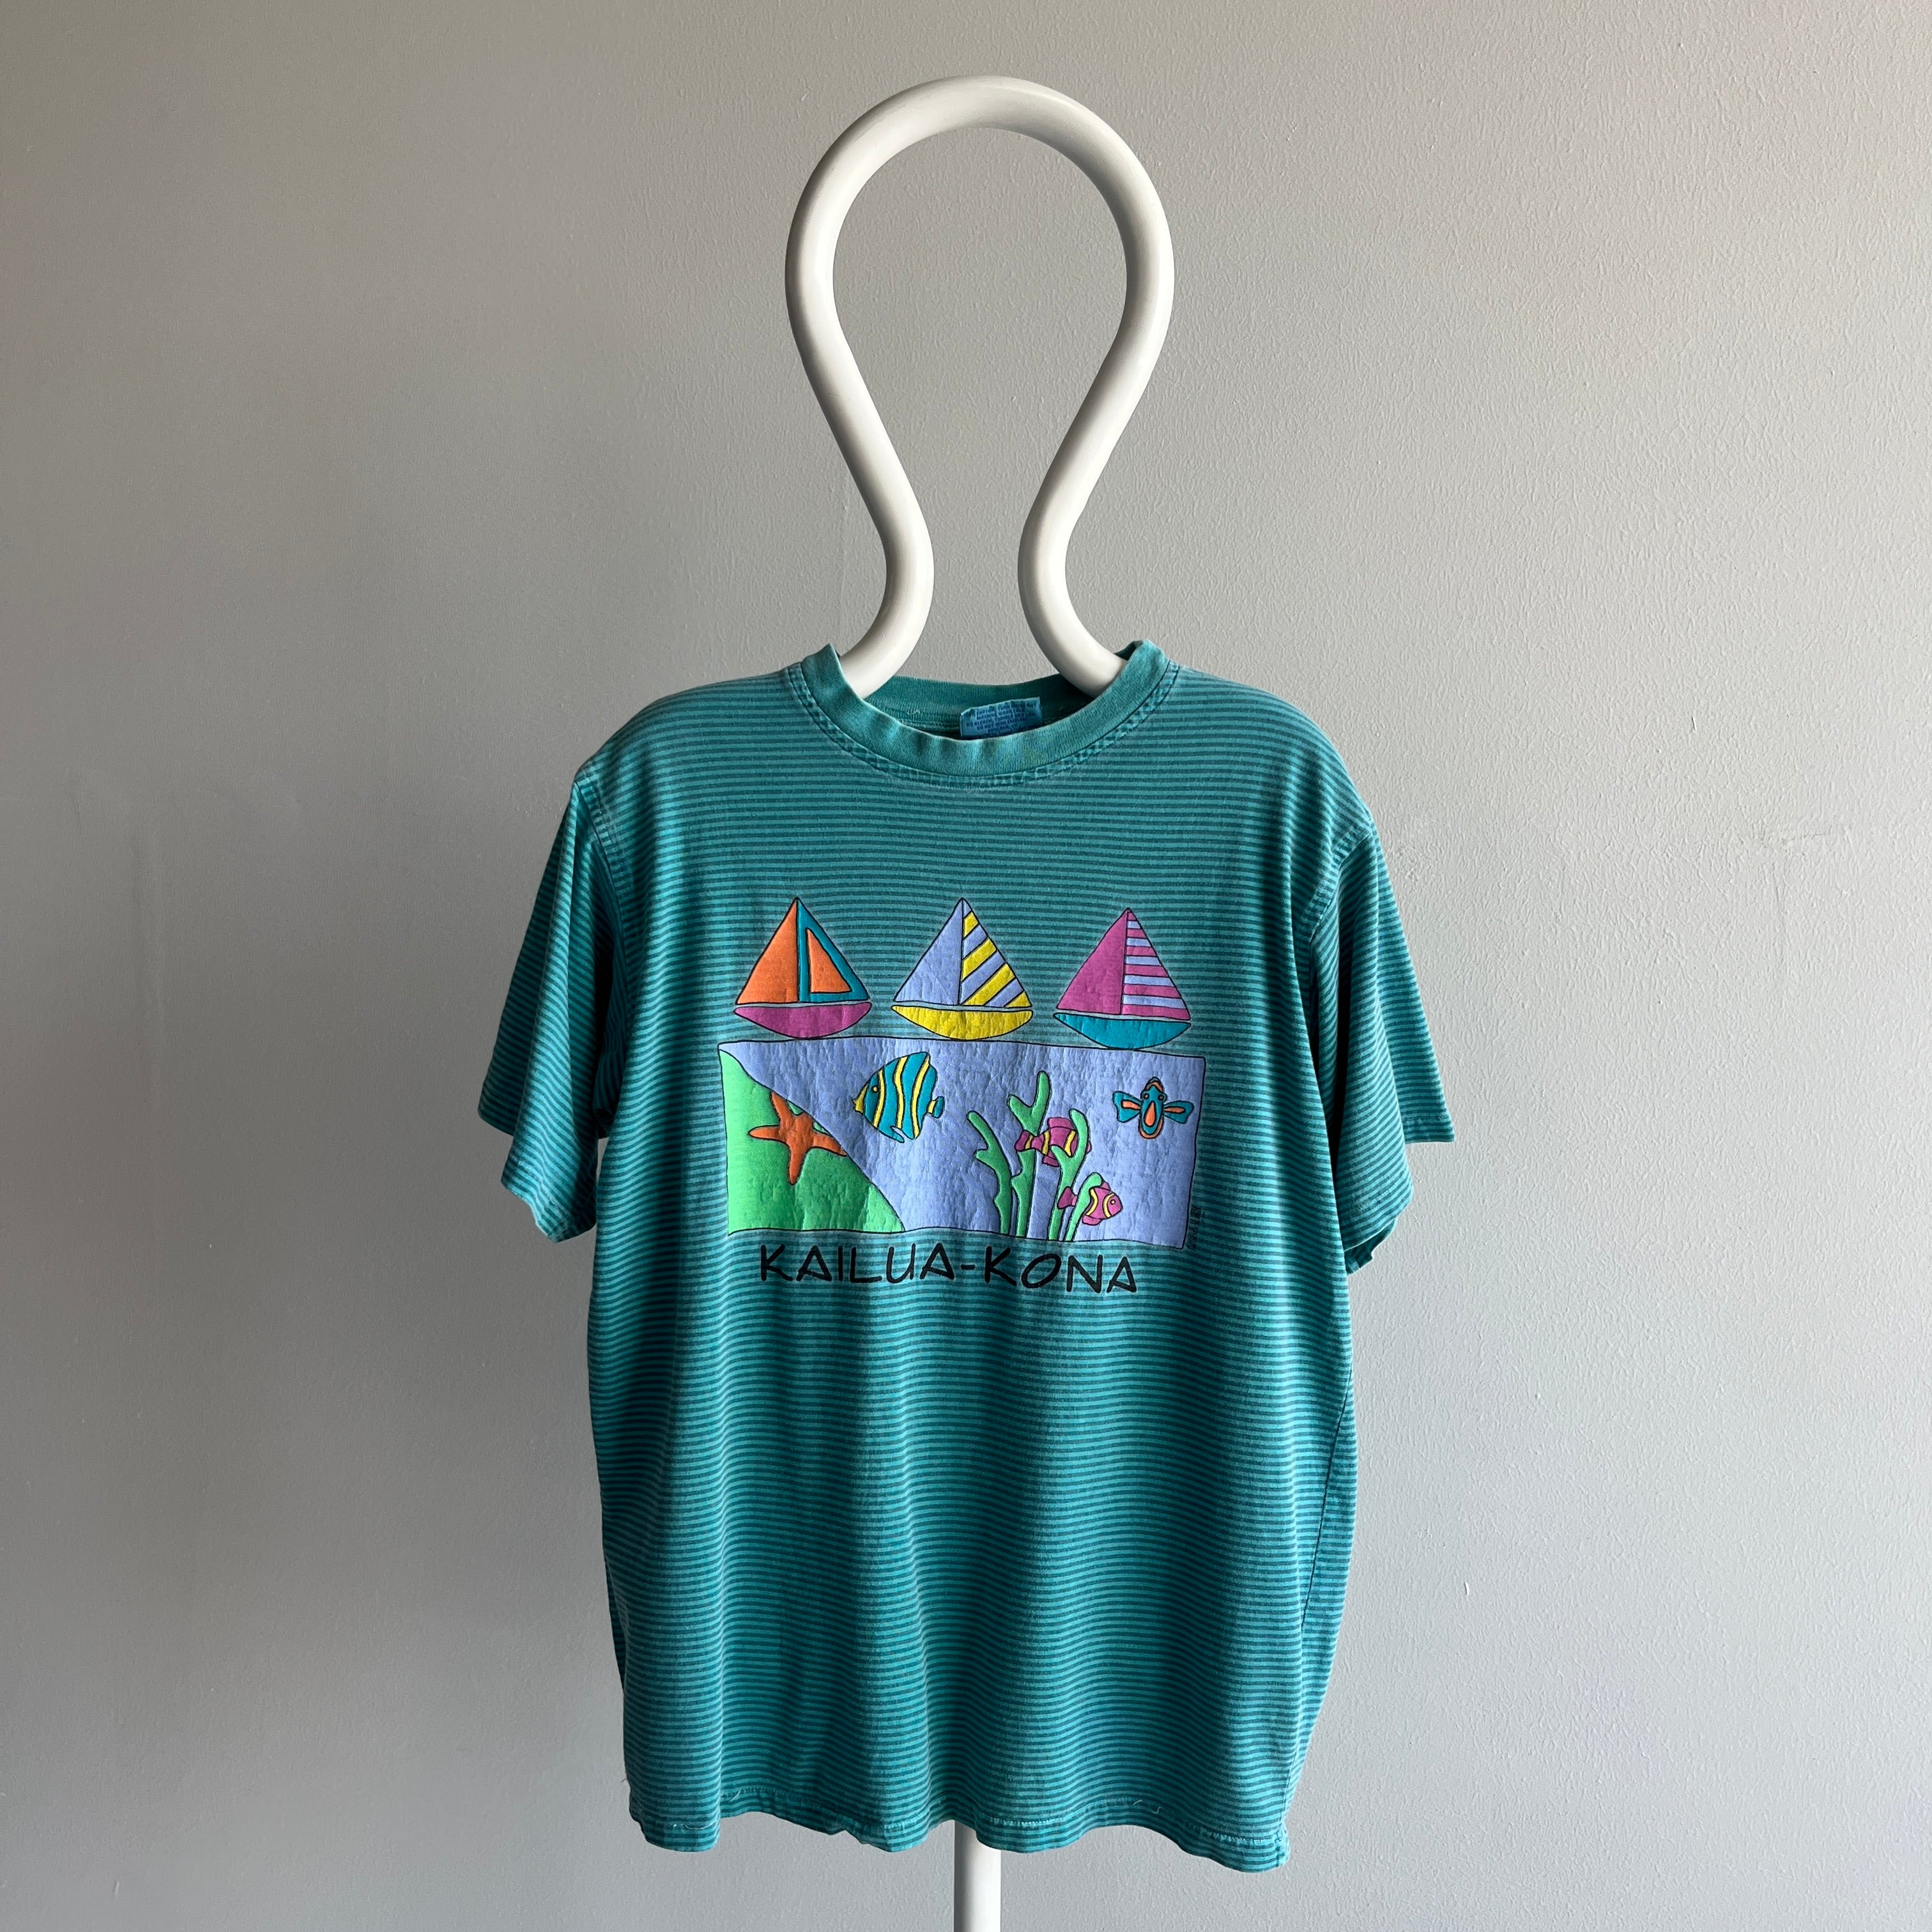 1990s Striped Kailua Kona Tourist T-Shirt